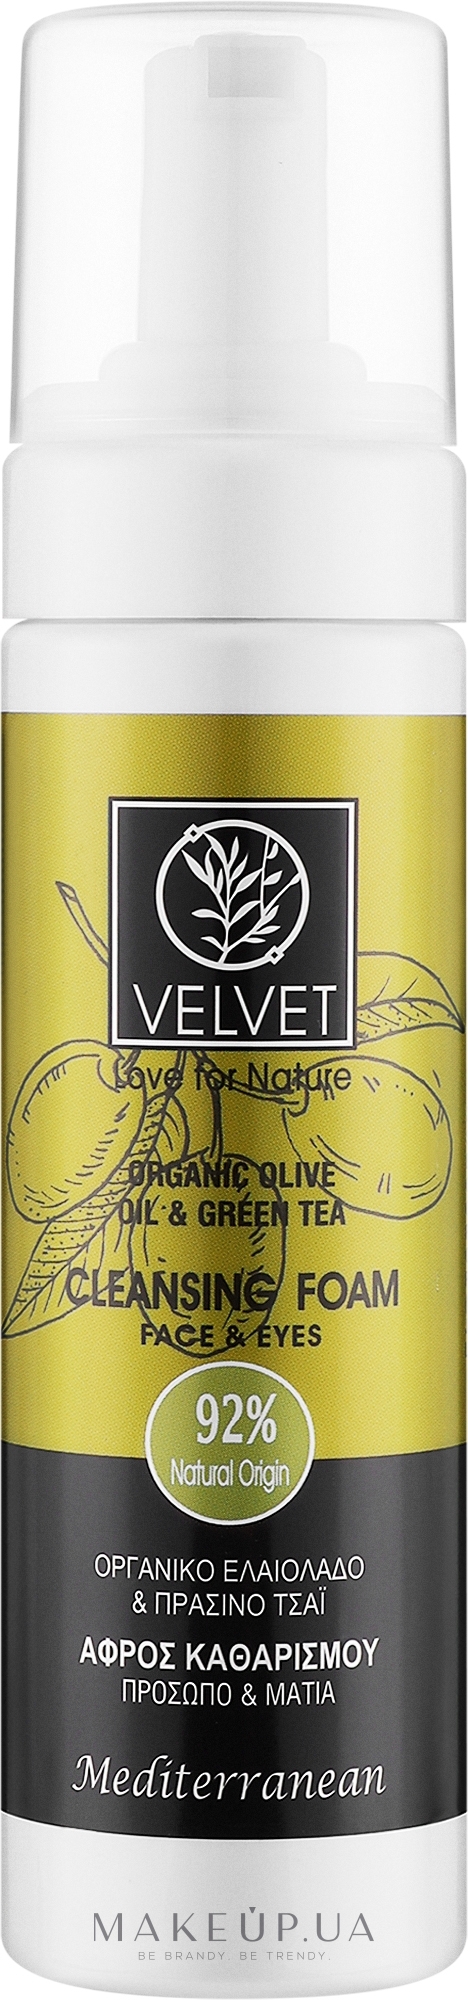 Очищающая пенка для лица и глаз - Velvet Love for Nature Organic Olive & Green Tea Foam — фото 200ml